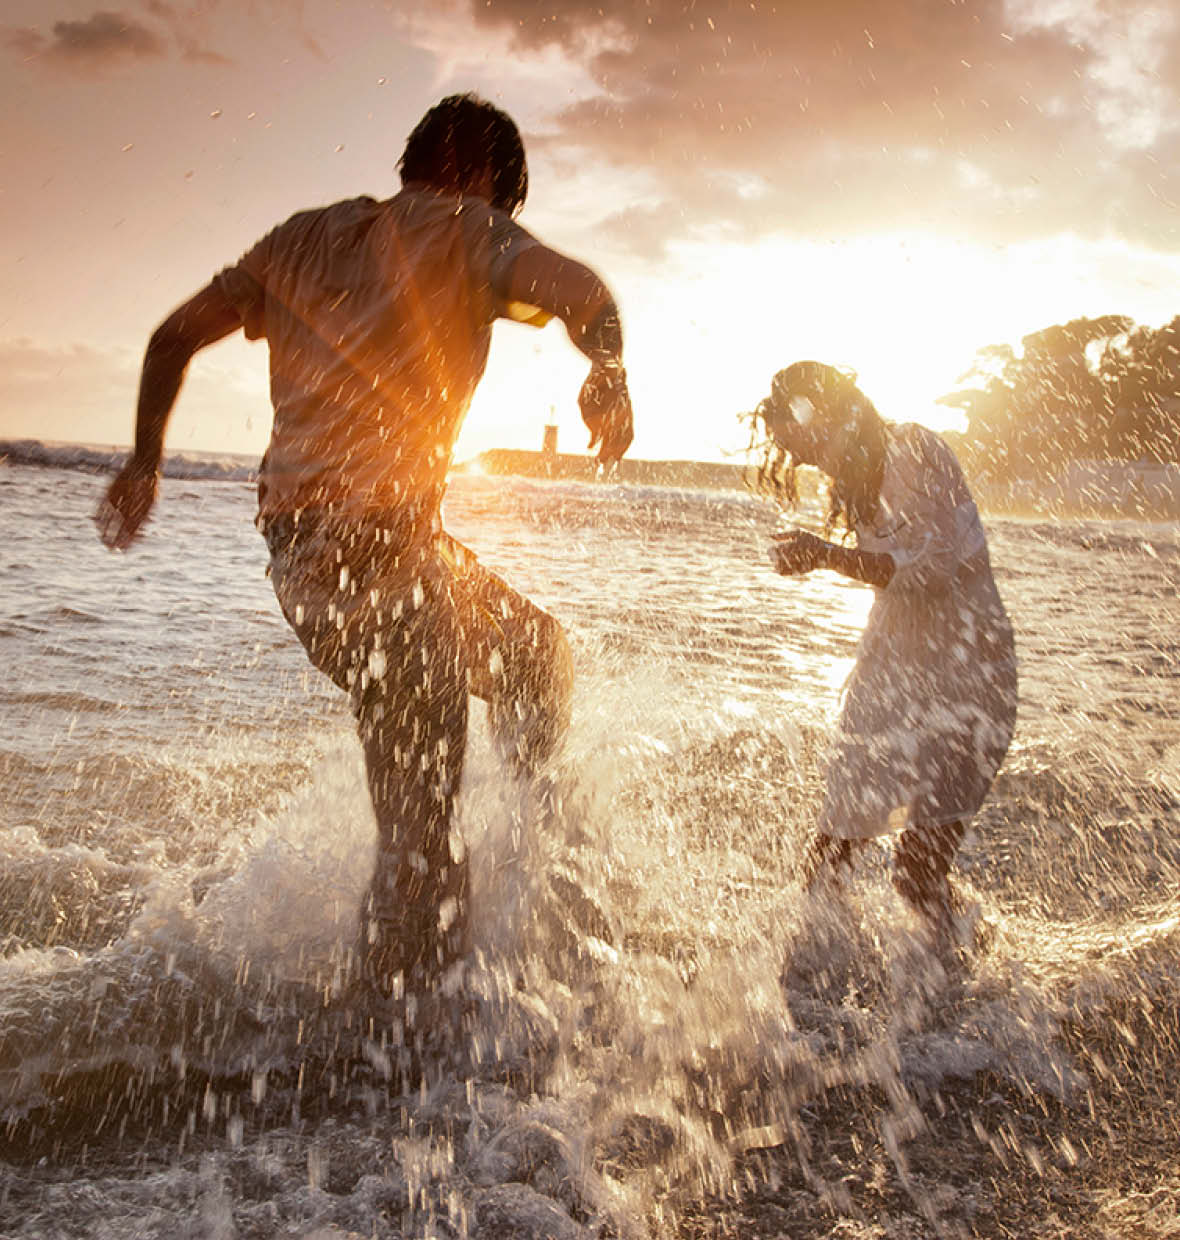 Couple splashing at the beach